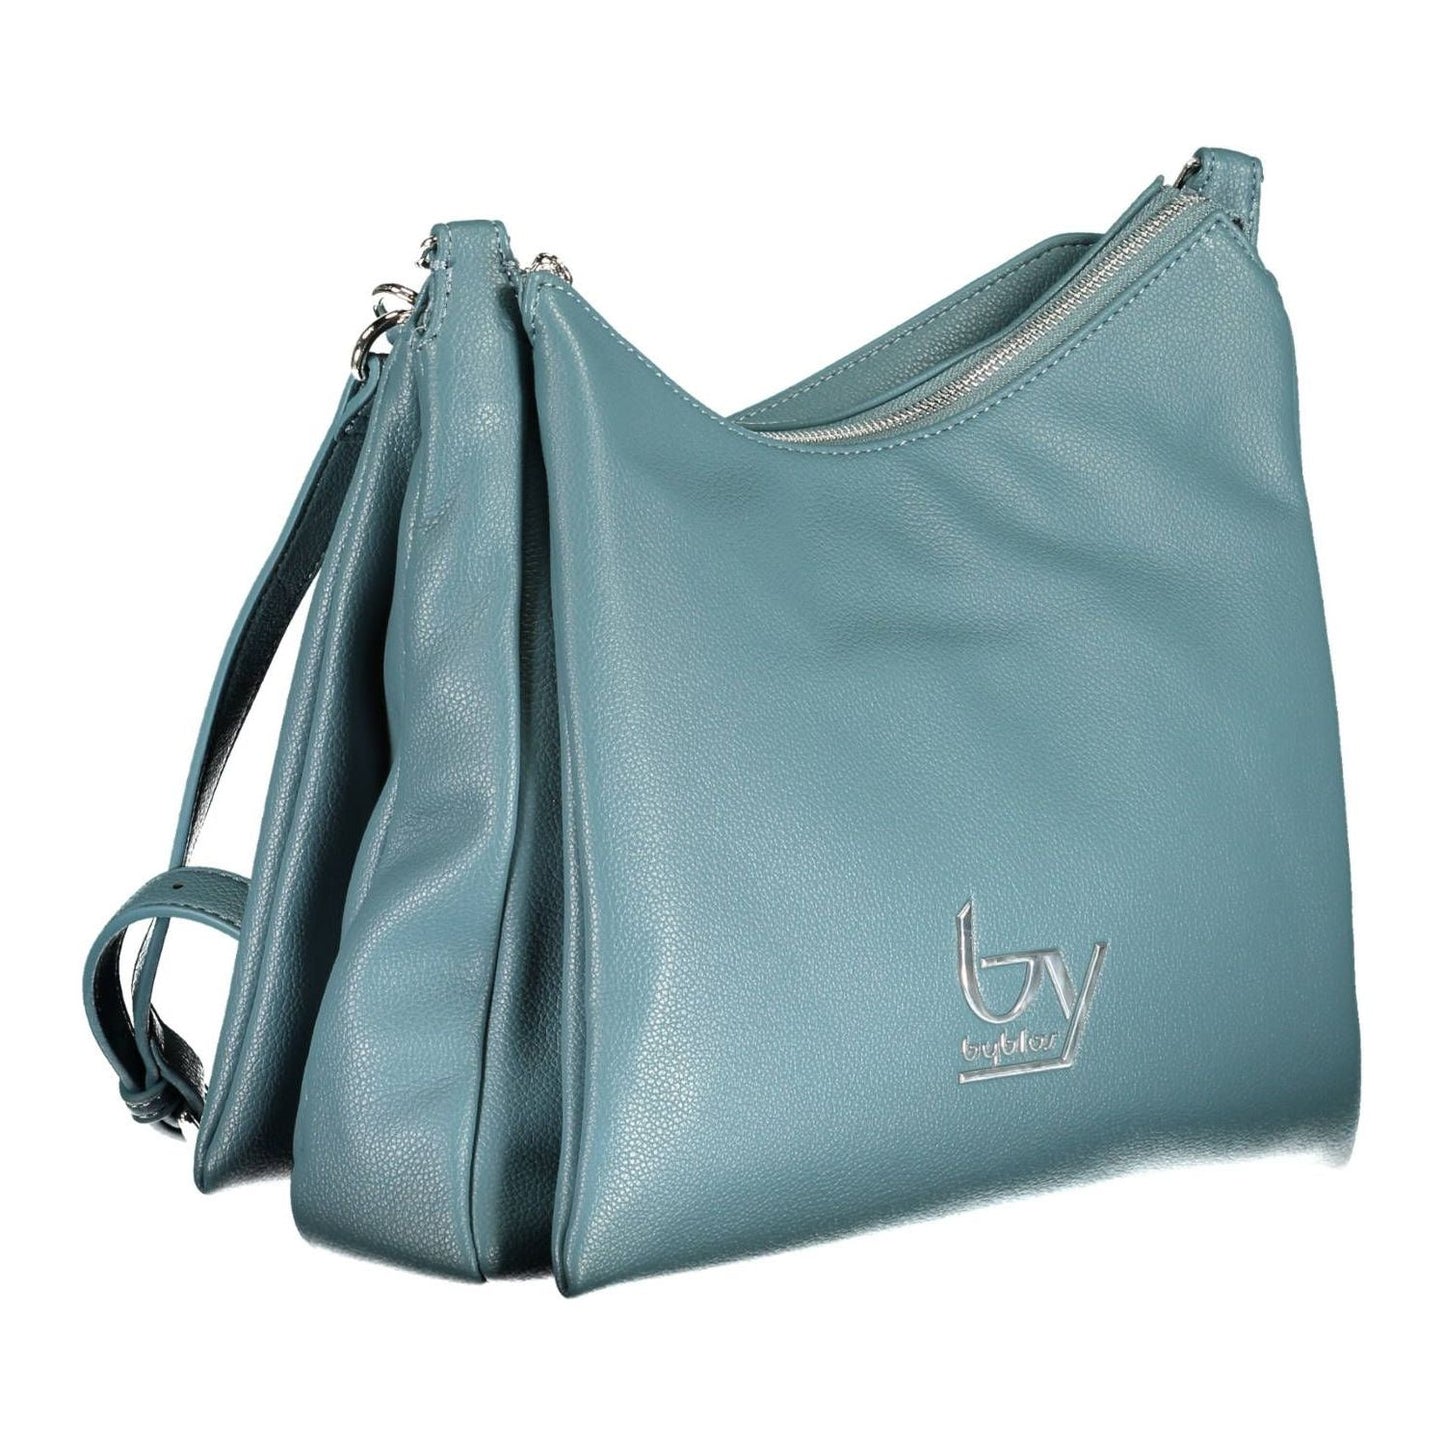 BYBLOS Elegant Blue Multi-Handle Handbag elegant-blue-multi-handle-handbag